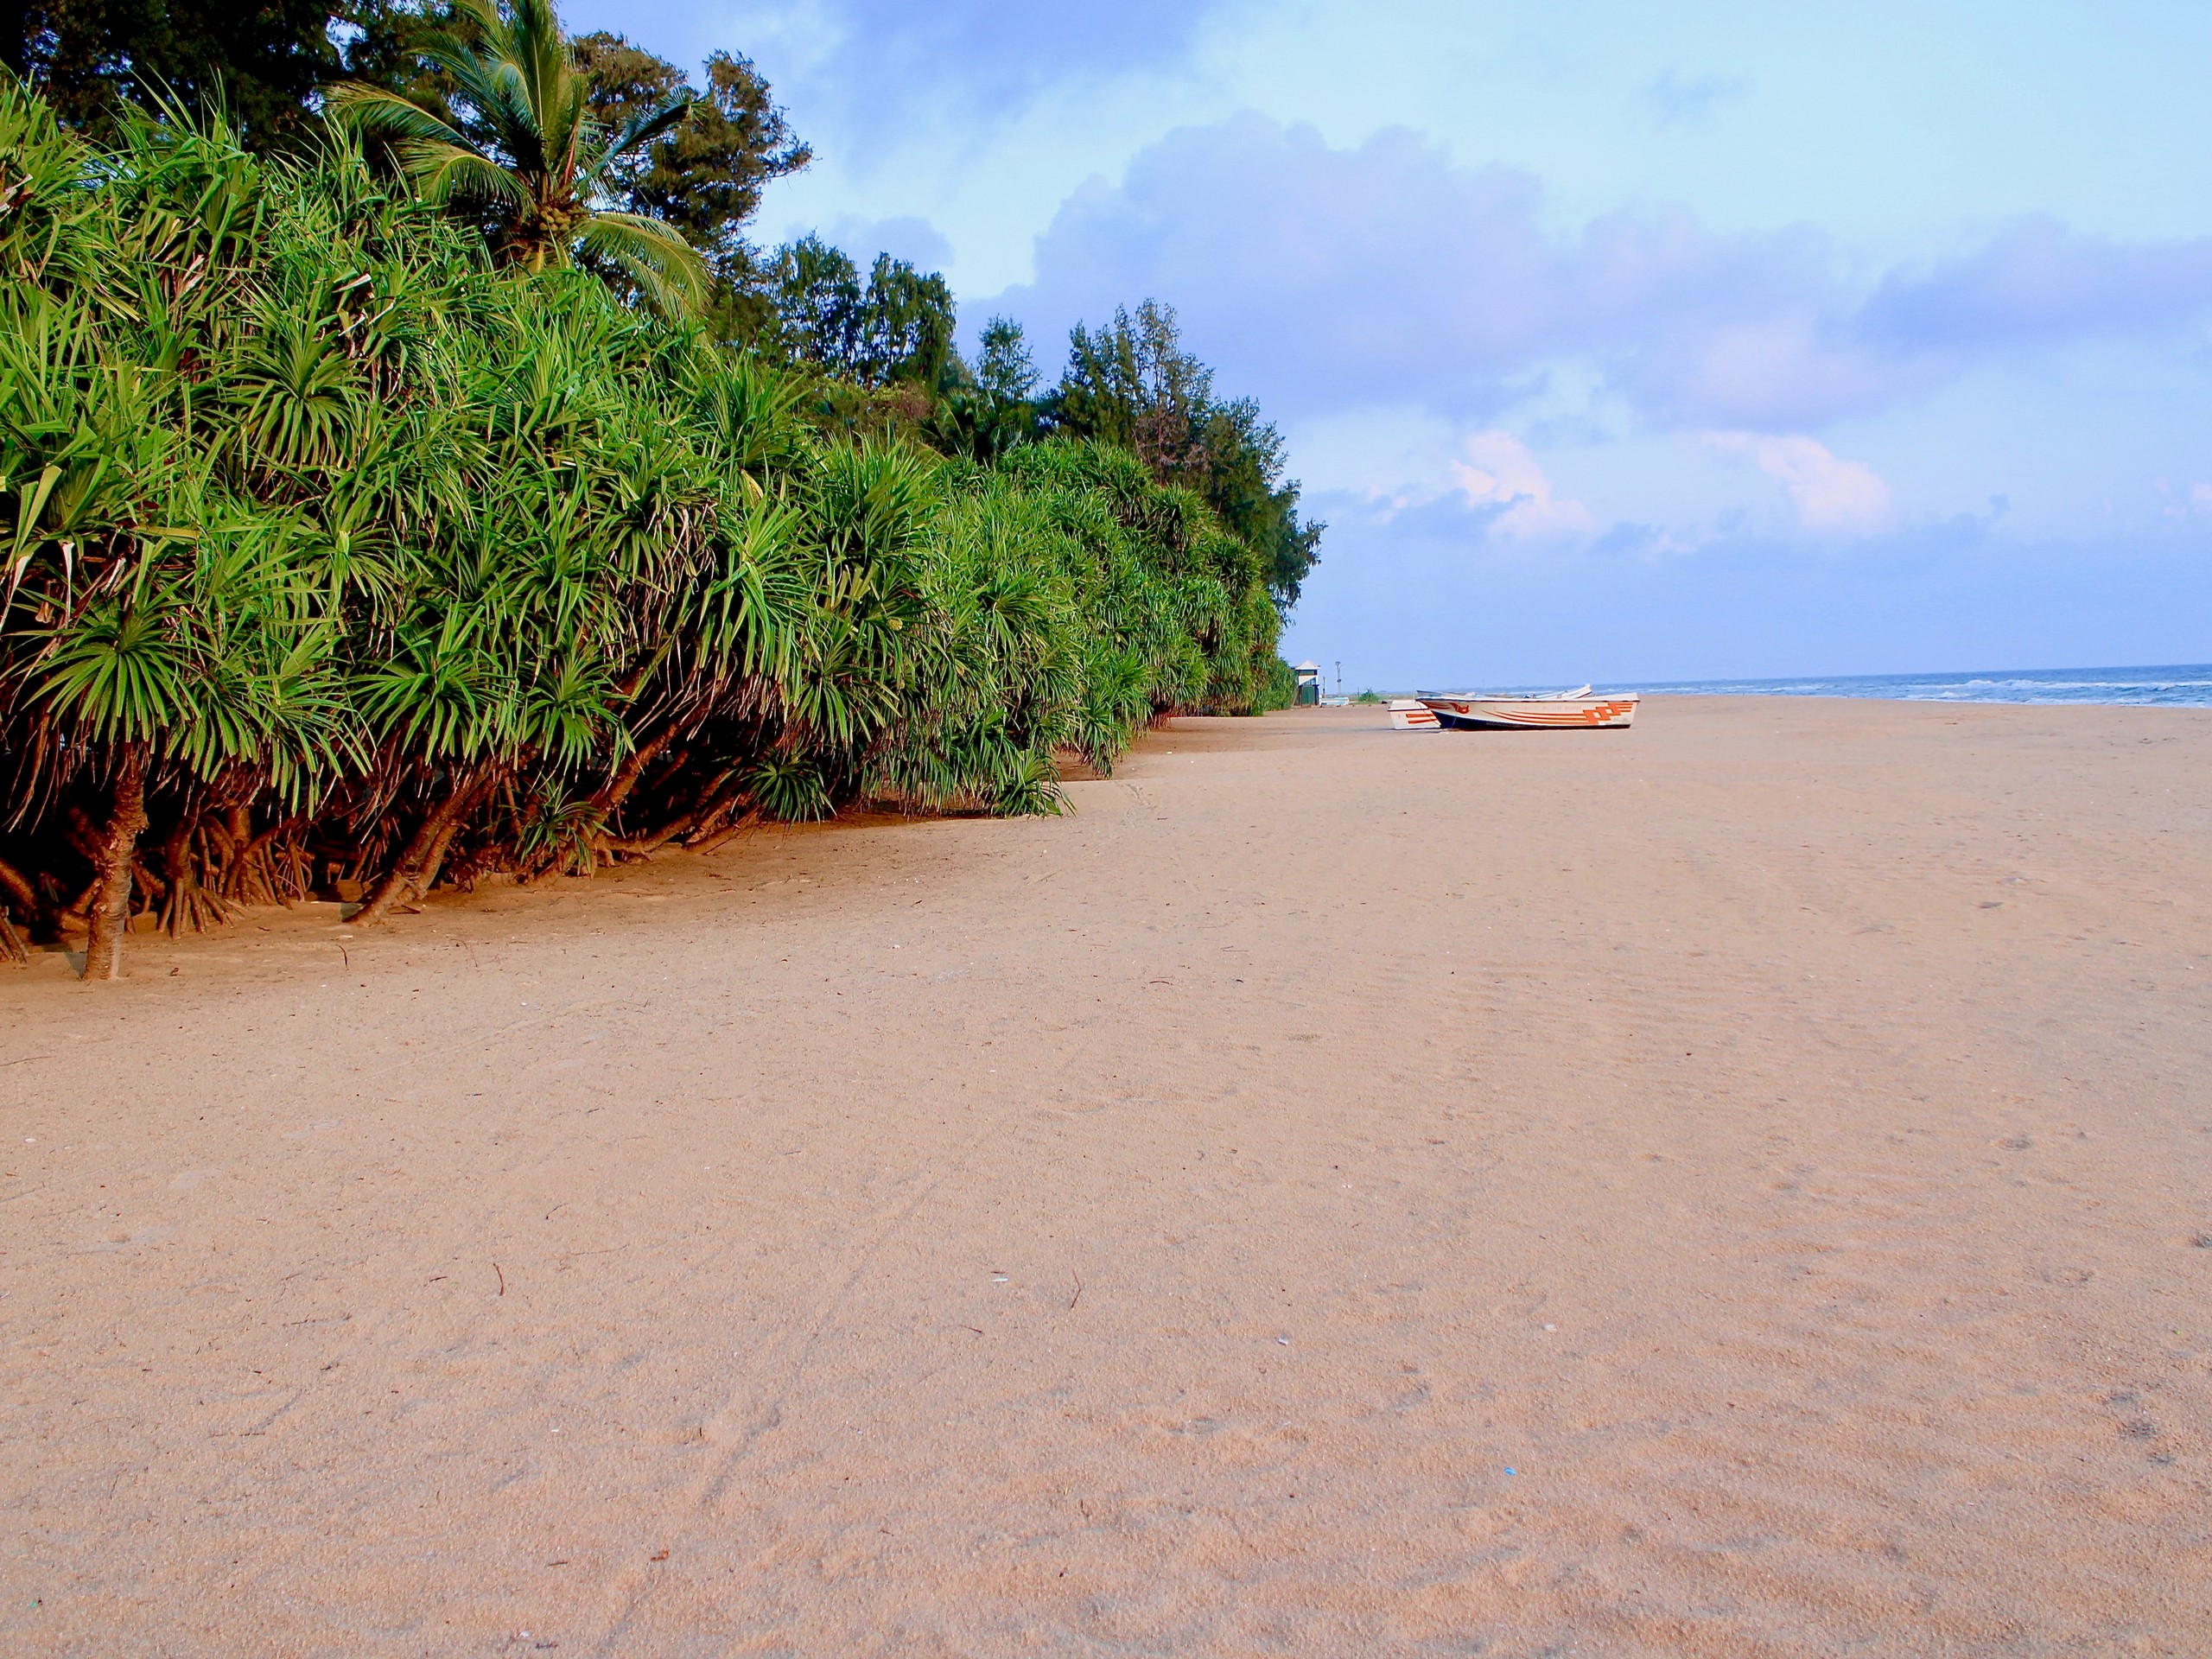 Vast sandy beach in Sri Lanka